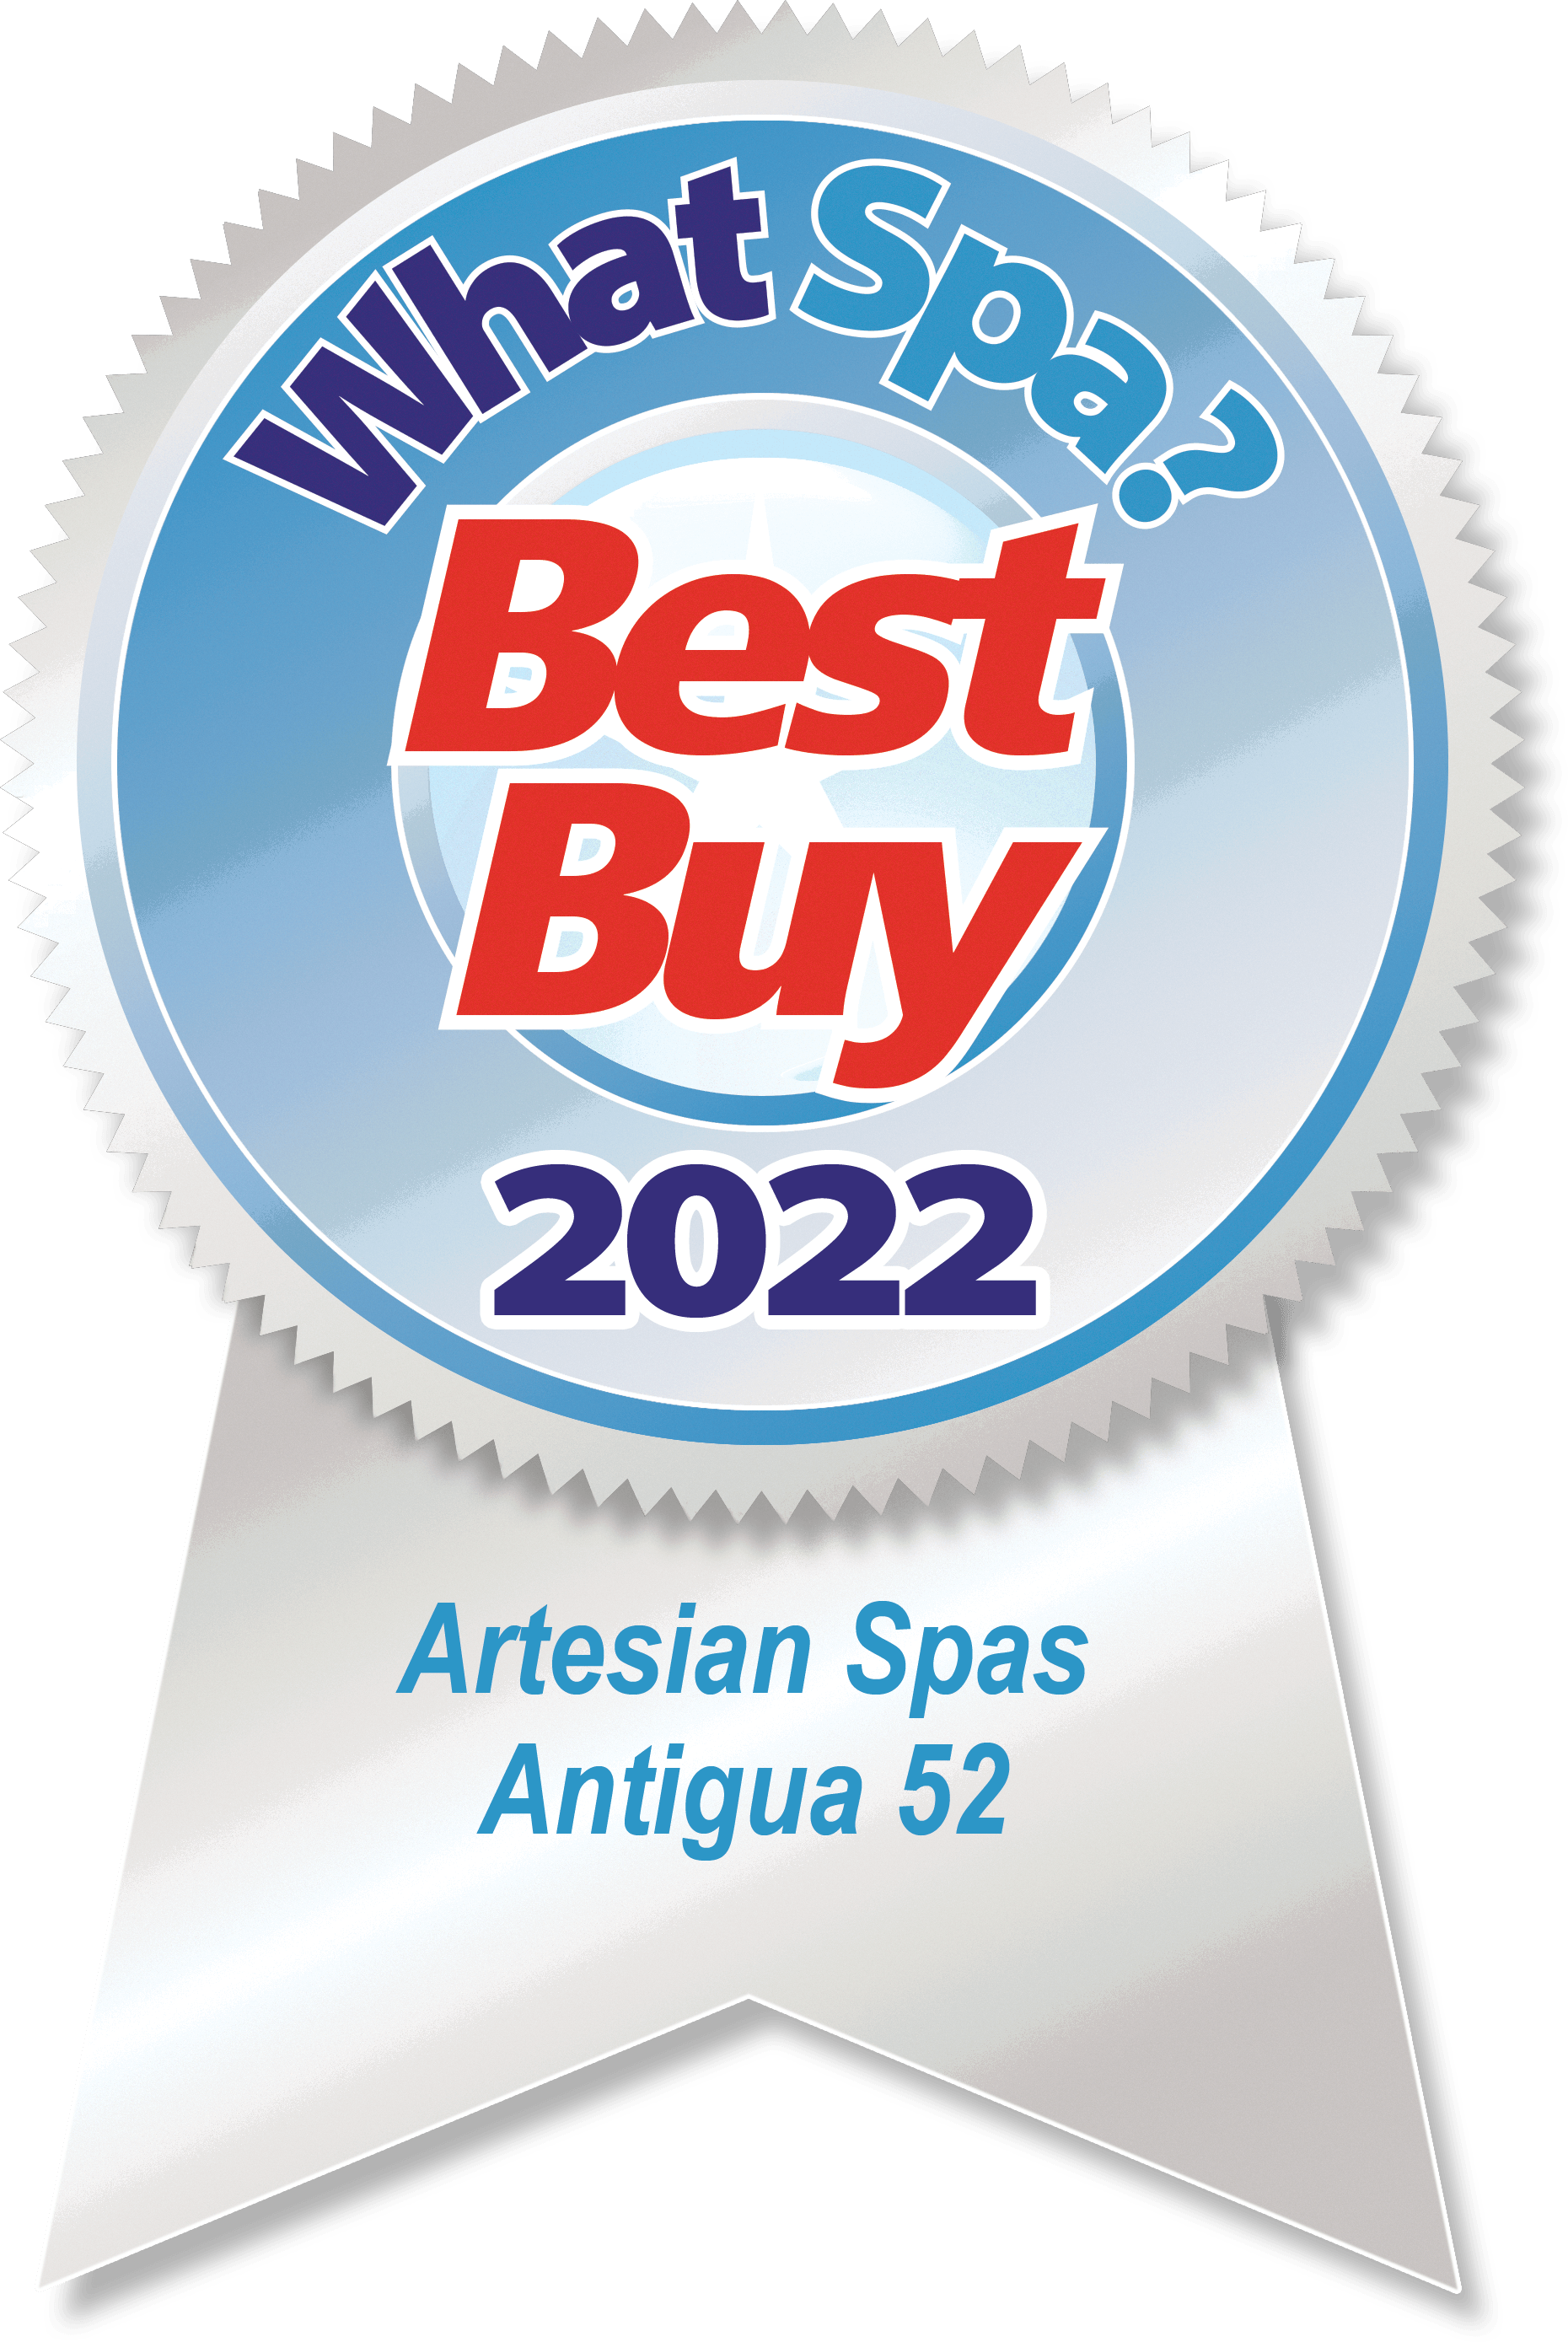 Artesian Spas Antigua 52 what spas logo